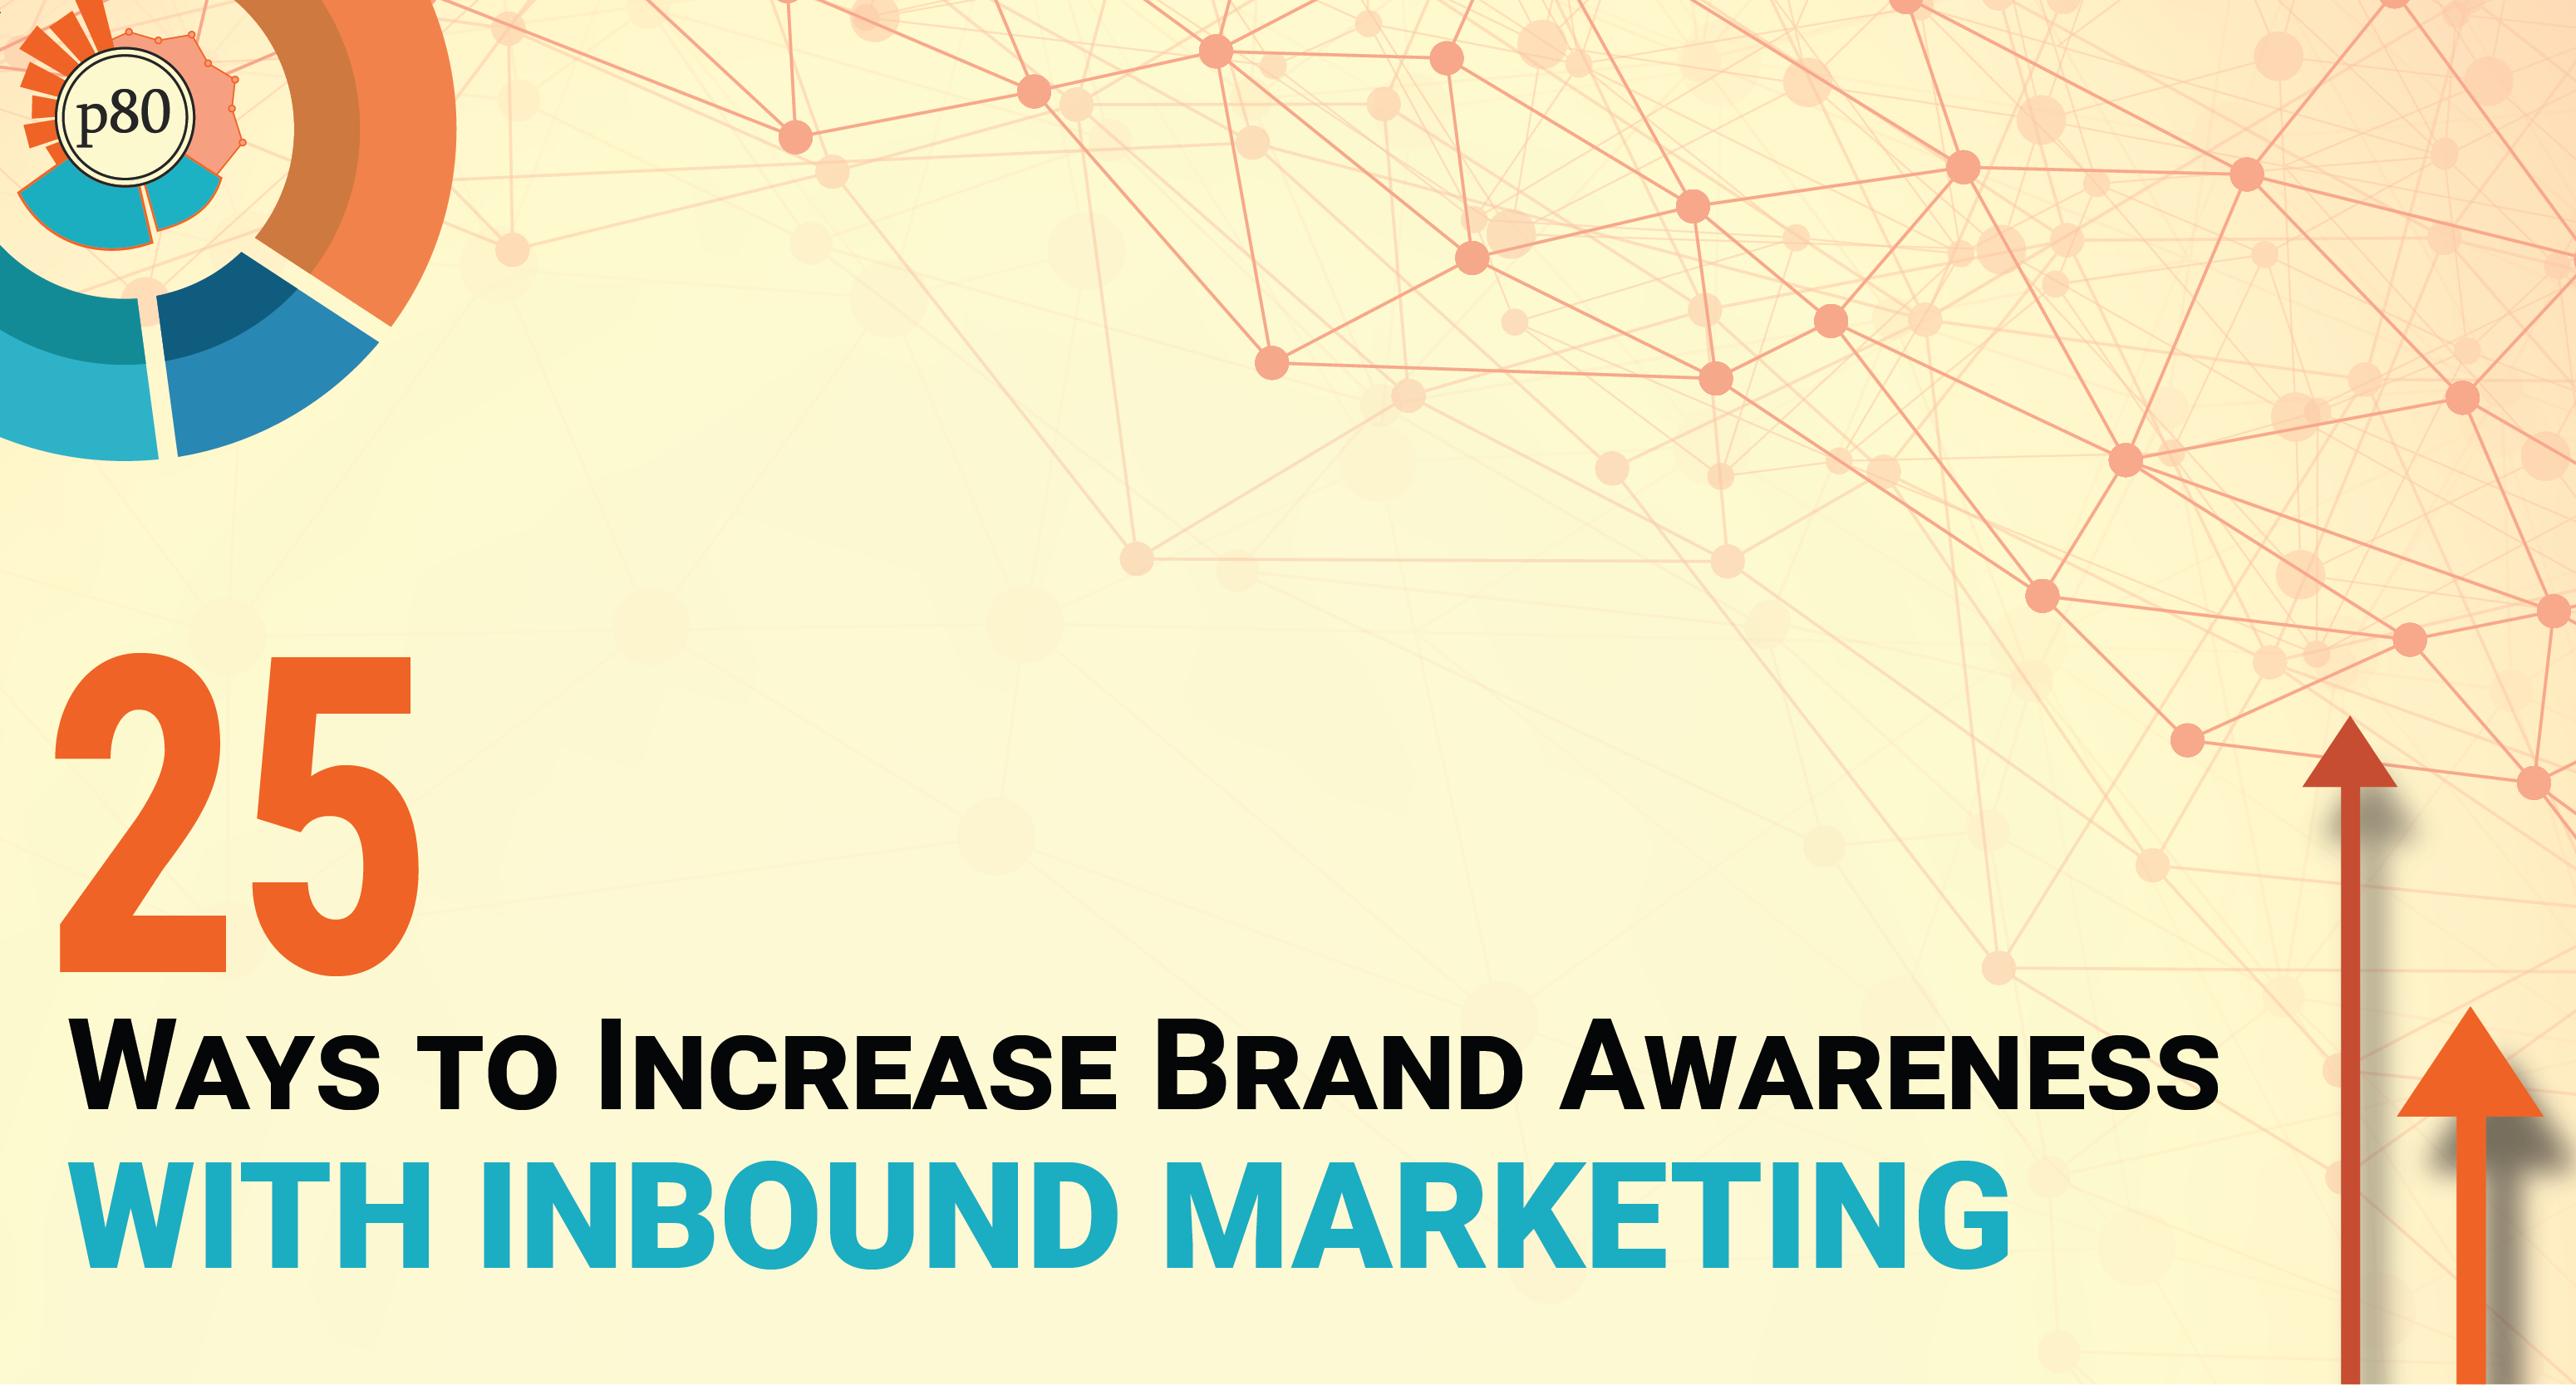 25 Ways to Increase Brand Awareness with Inbound Marketing